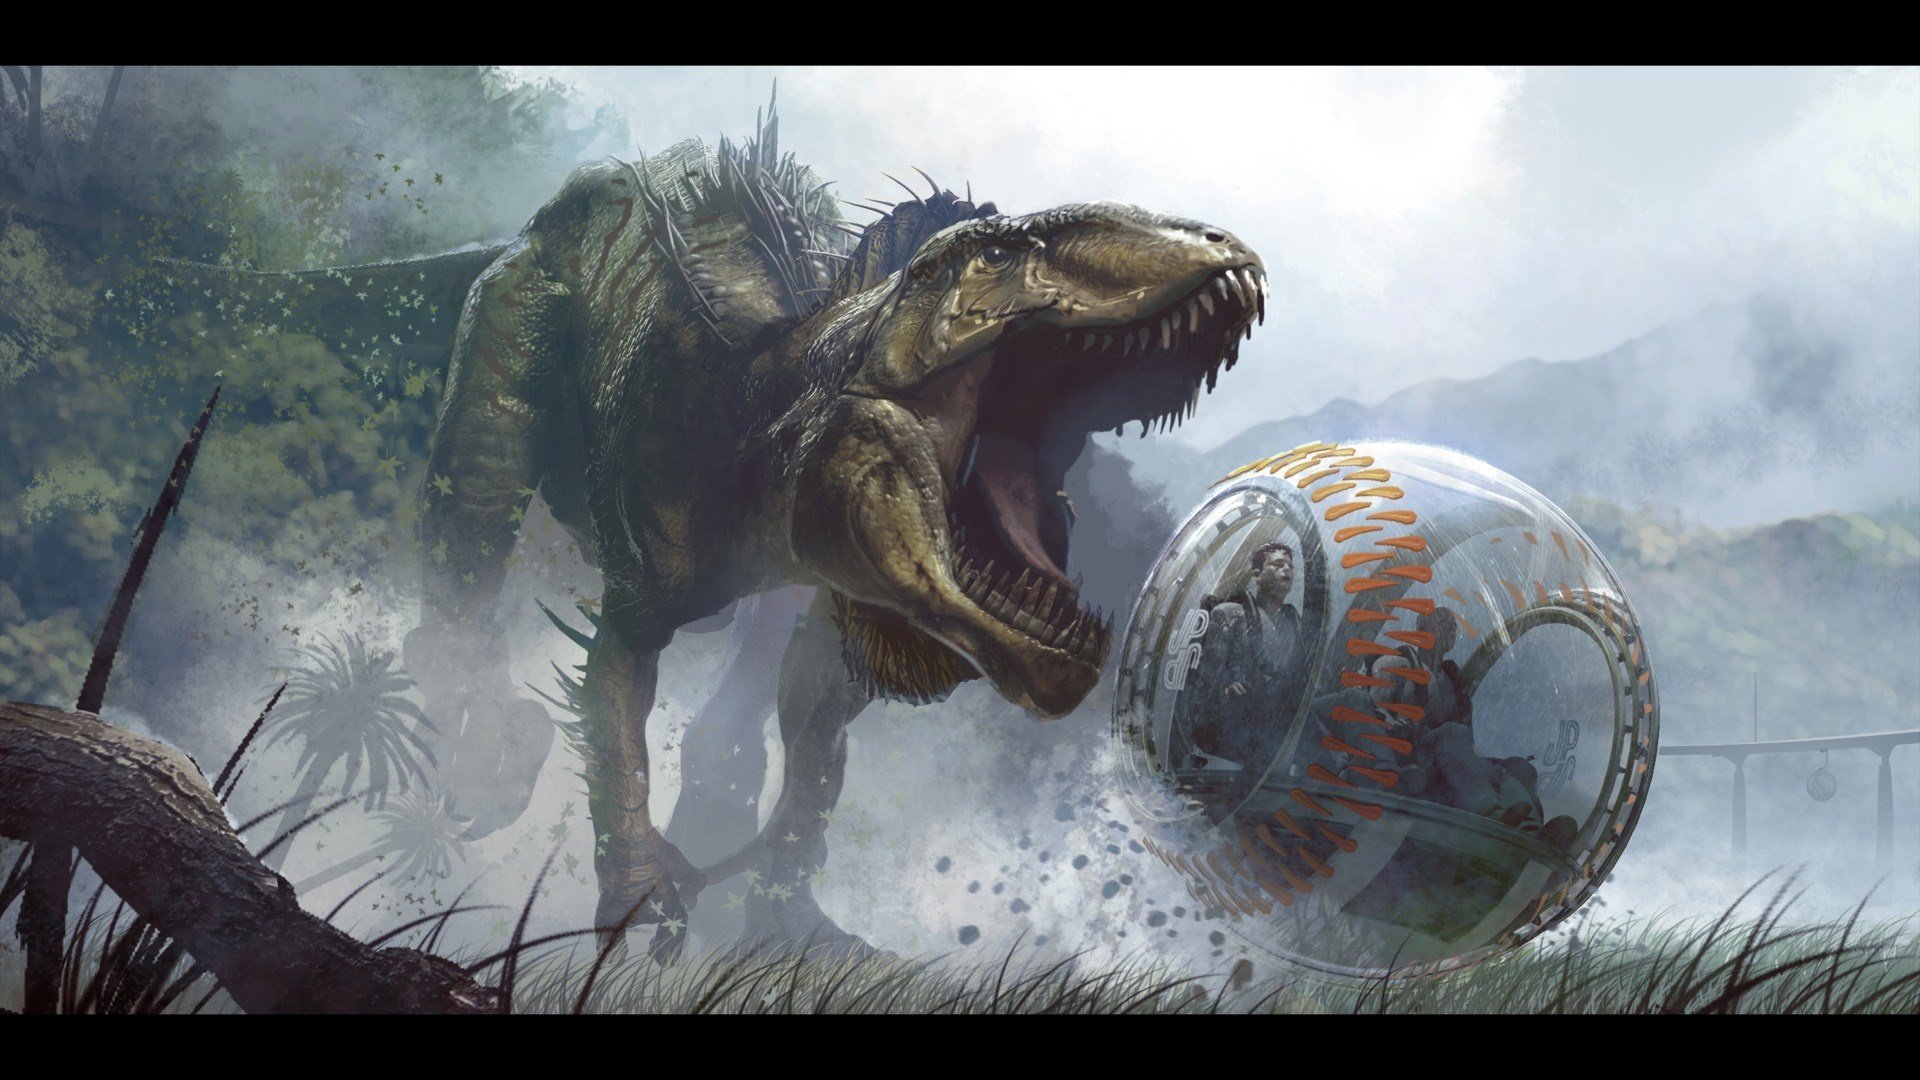 Desktop wallpaper run, video game, dinosaur, jurassic world evolution, HD image, picture, background, cf0237